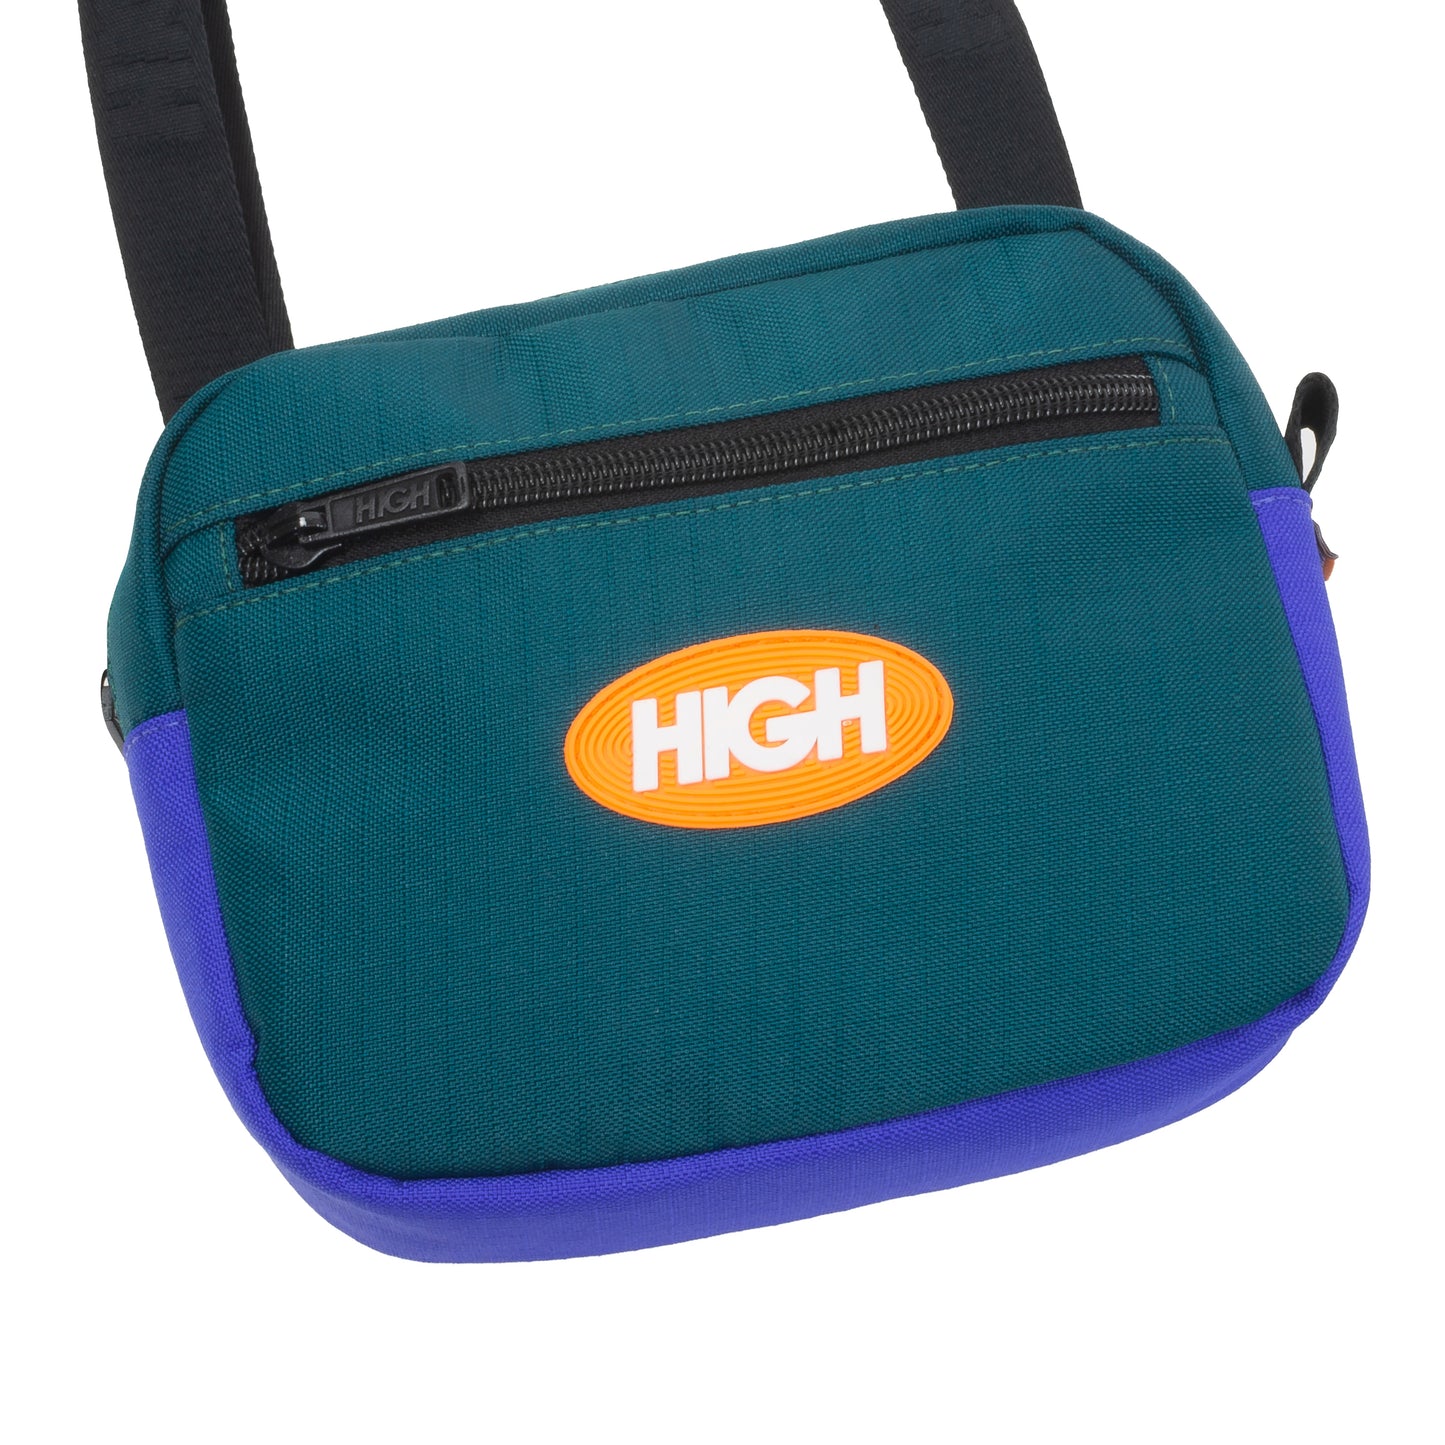 HIGH - Waist Bag HTS "Night Green/Blue" - THE GAME